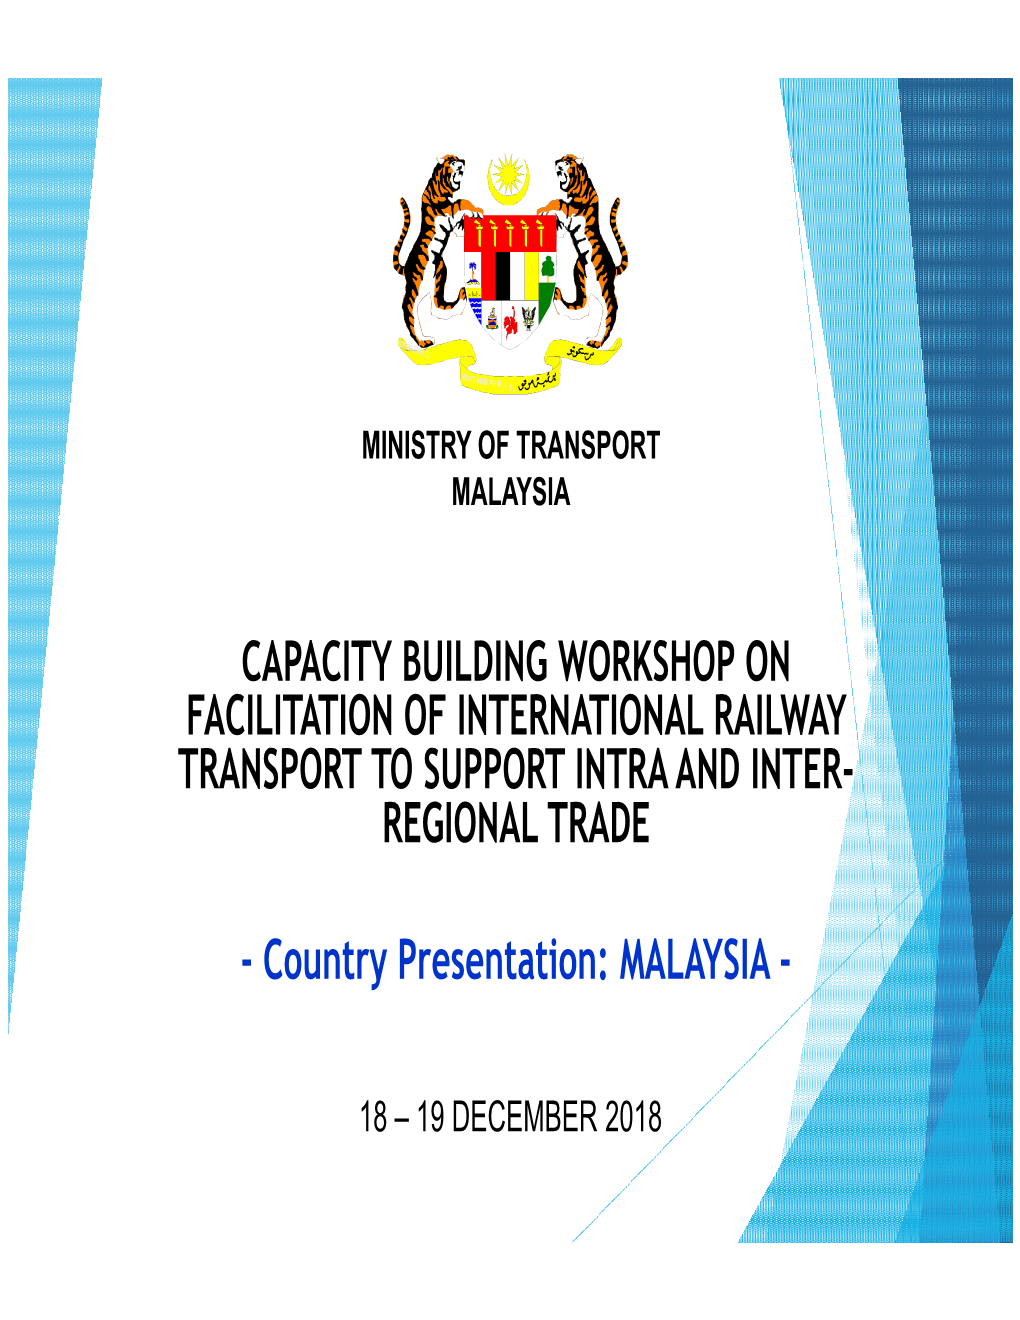 Country Presentation: MALAYSIA